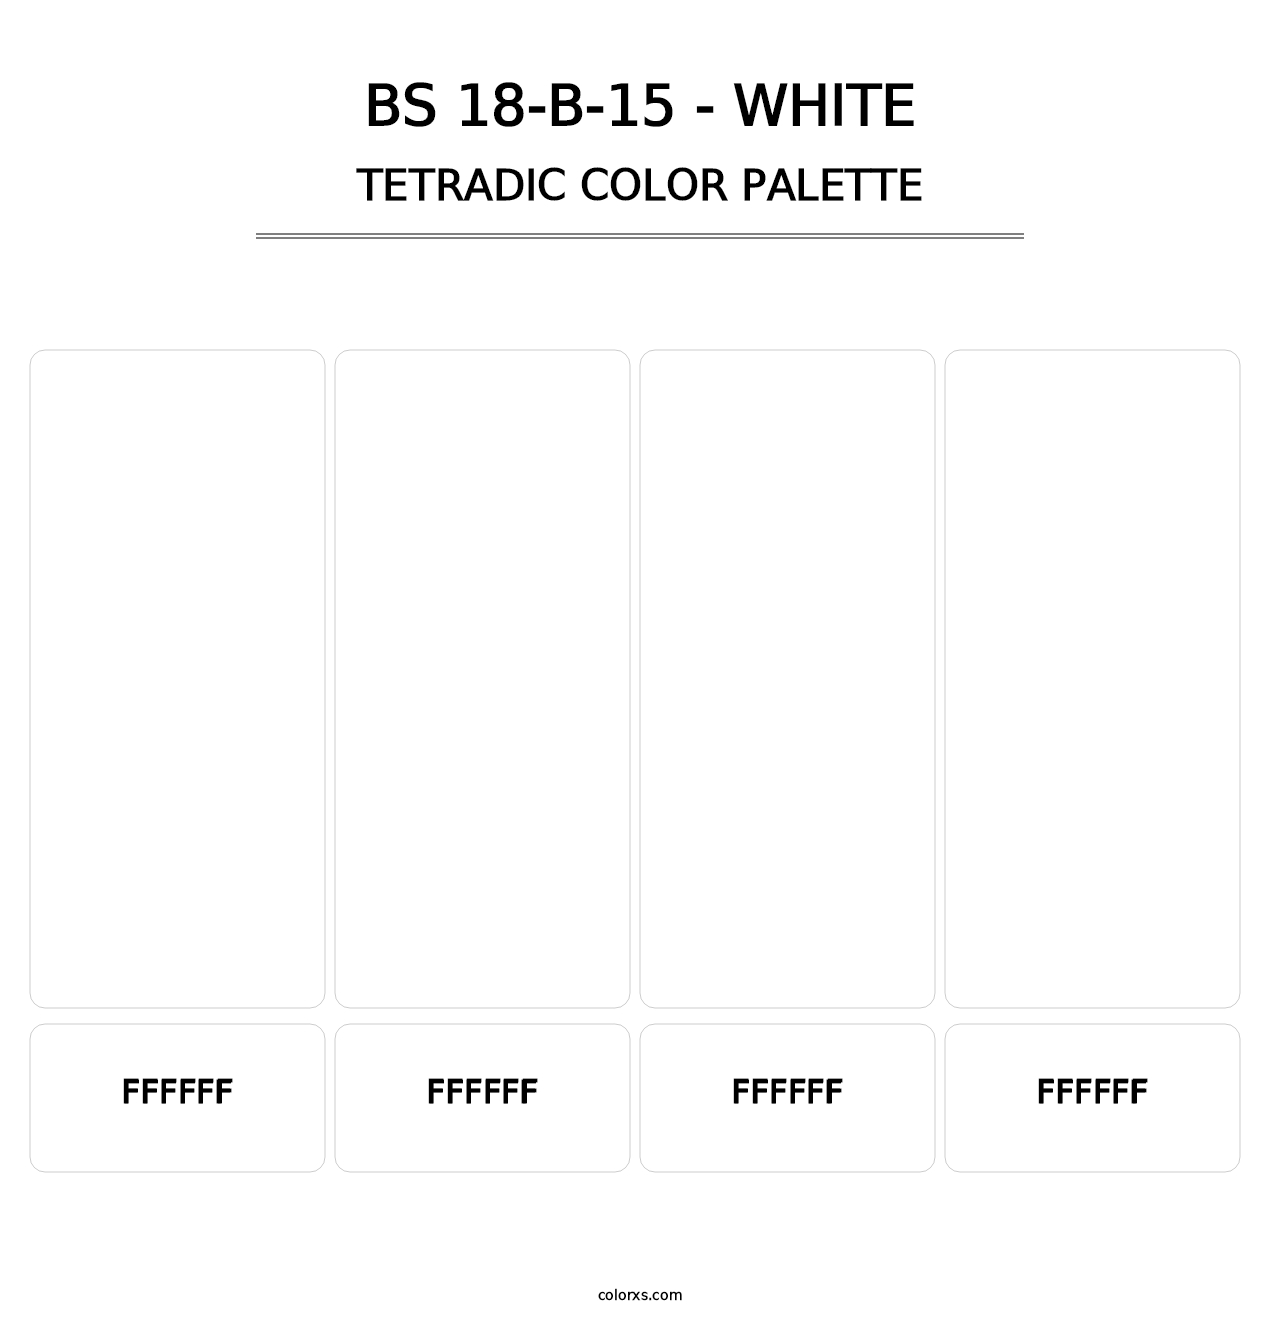 BS 18-B-15 - White - Tetradic Color Palette